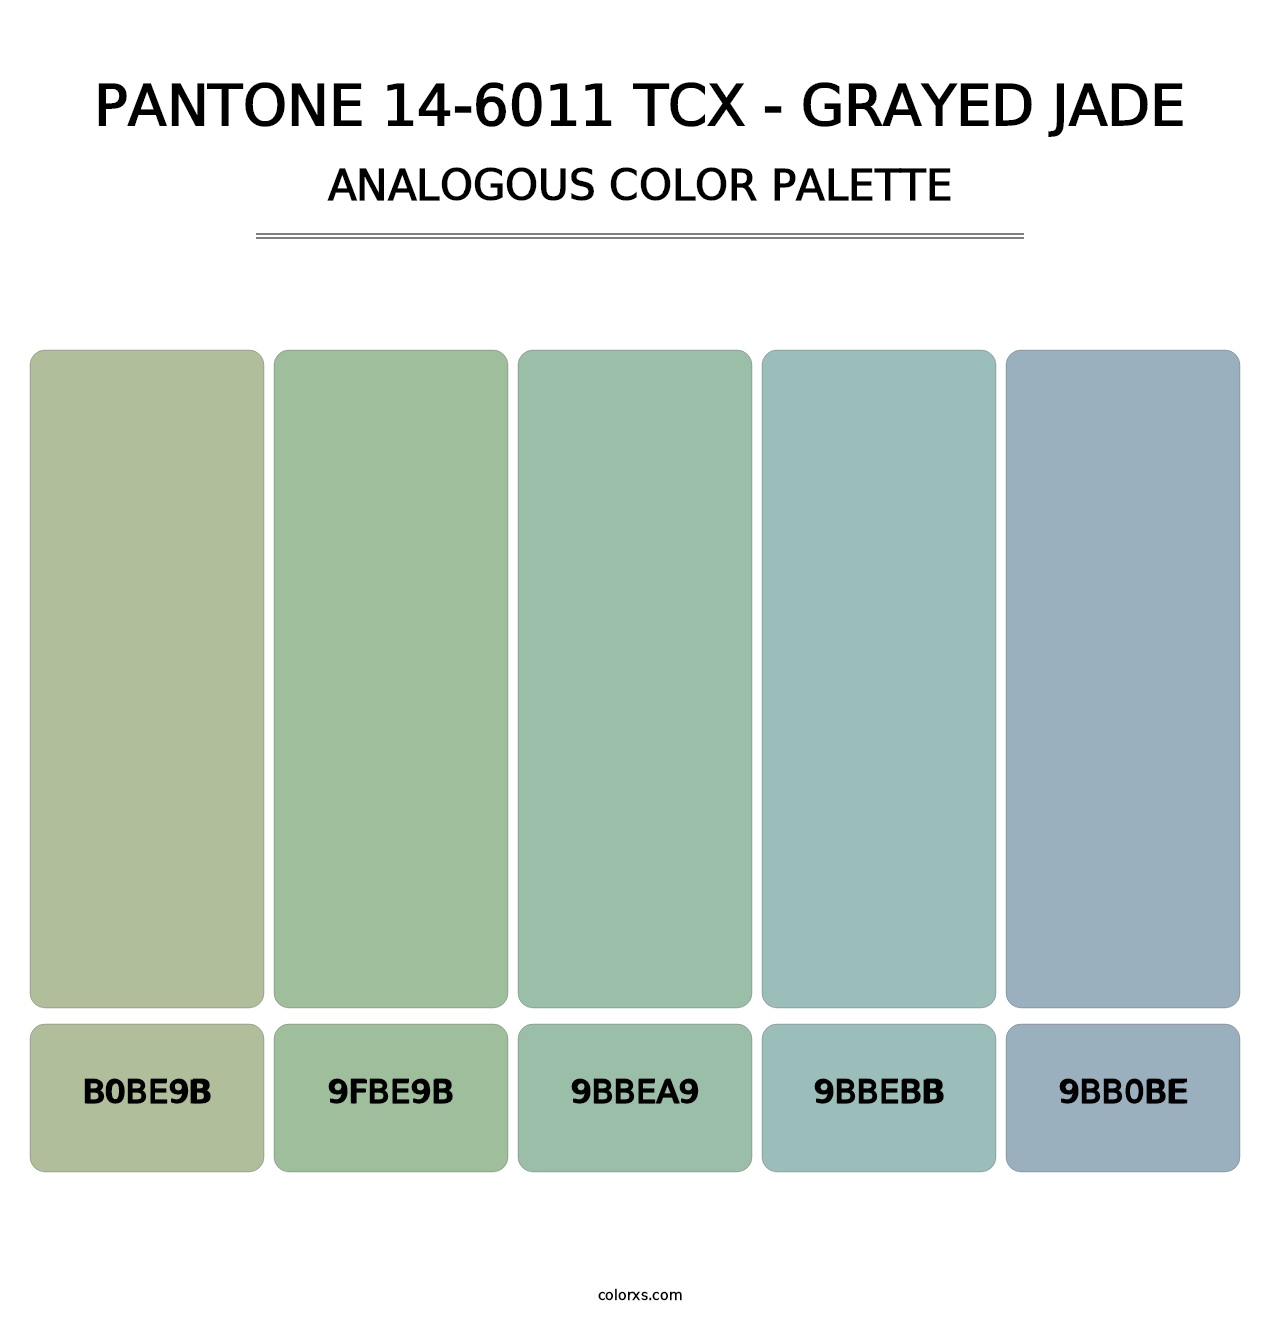 PANTONE 14-6011 TCX - Grayed Jade - Analogous Color Palette